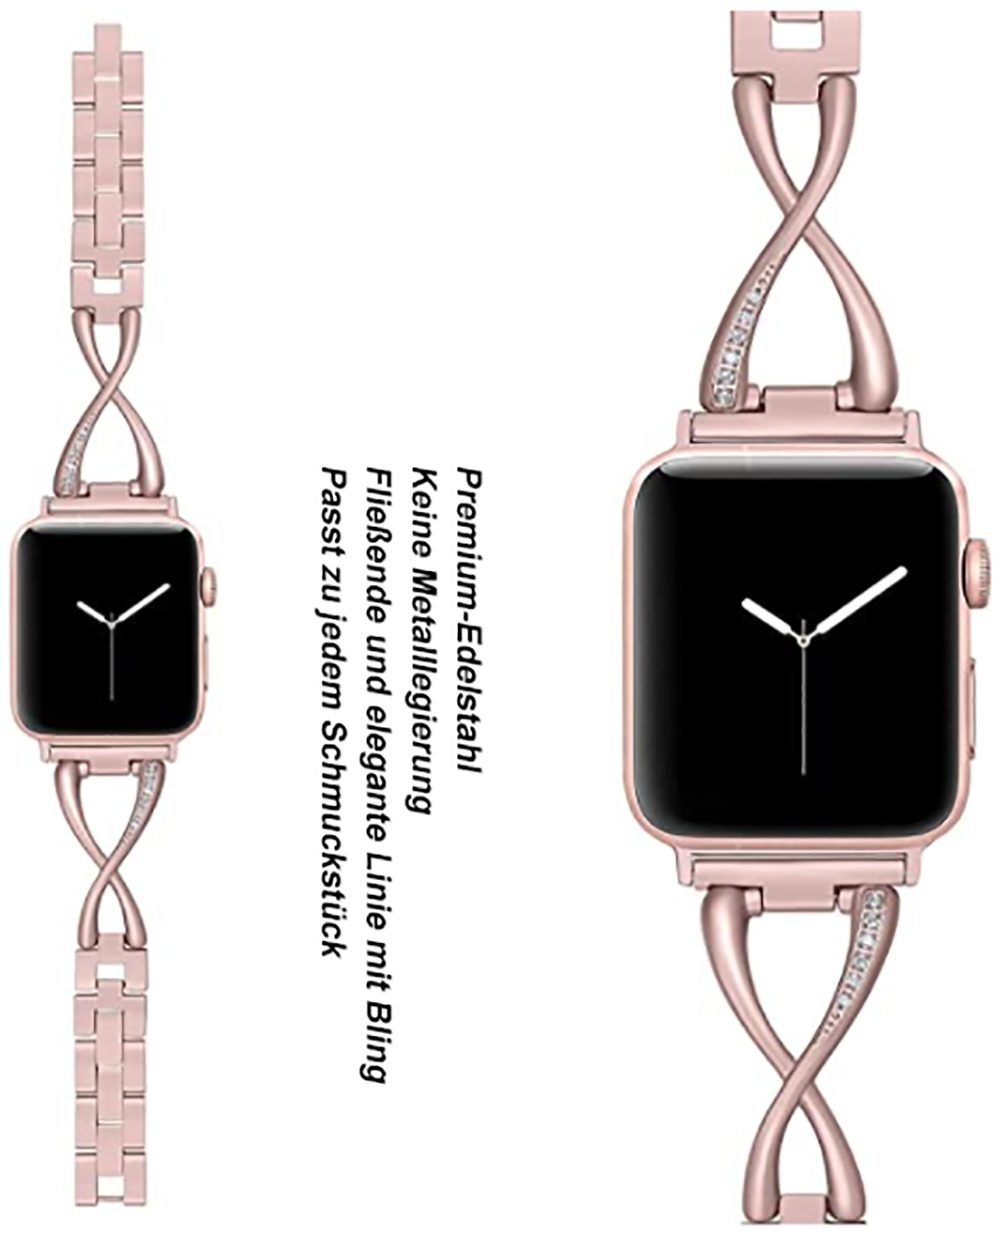 Diida Smartwatch-Armband Watch 1-7,Rosa.42/44mm watch Band,Uhrenarmbänder,für apple